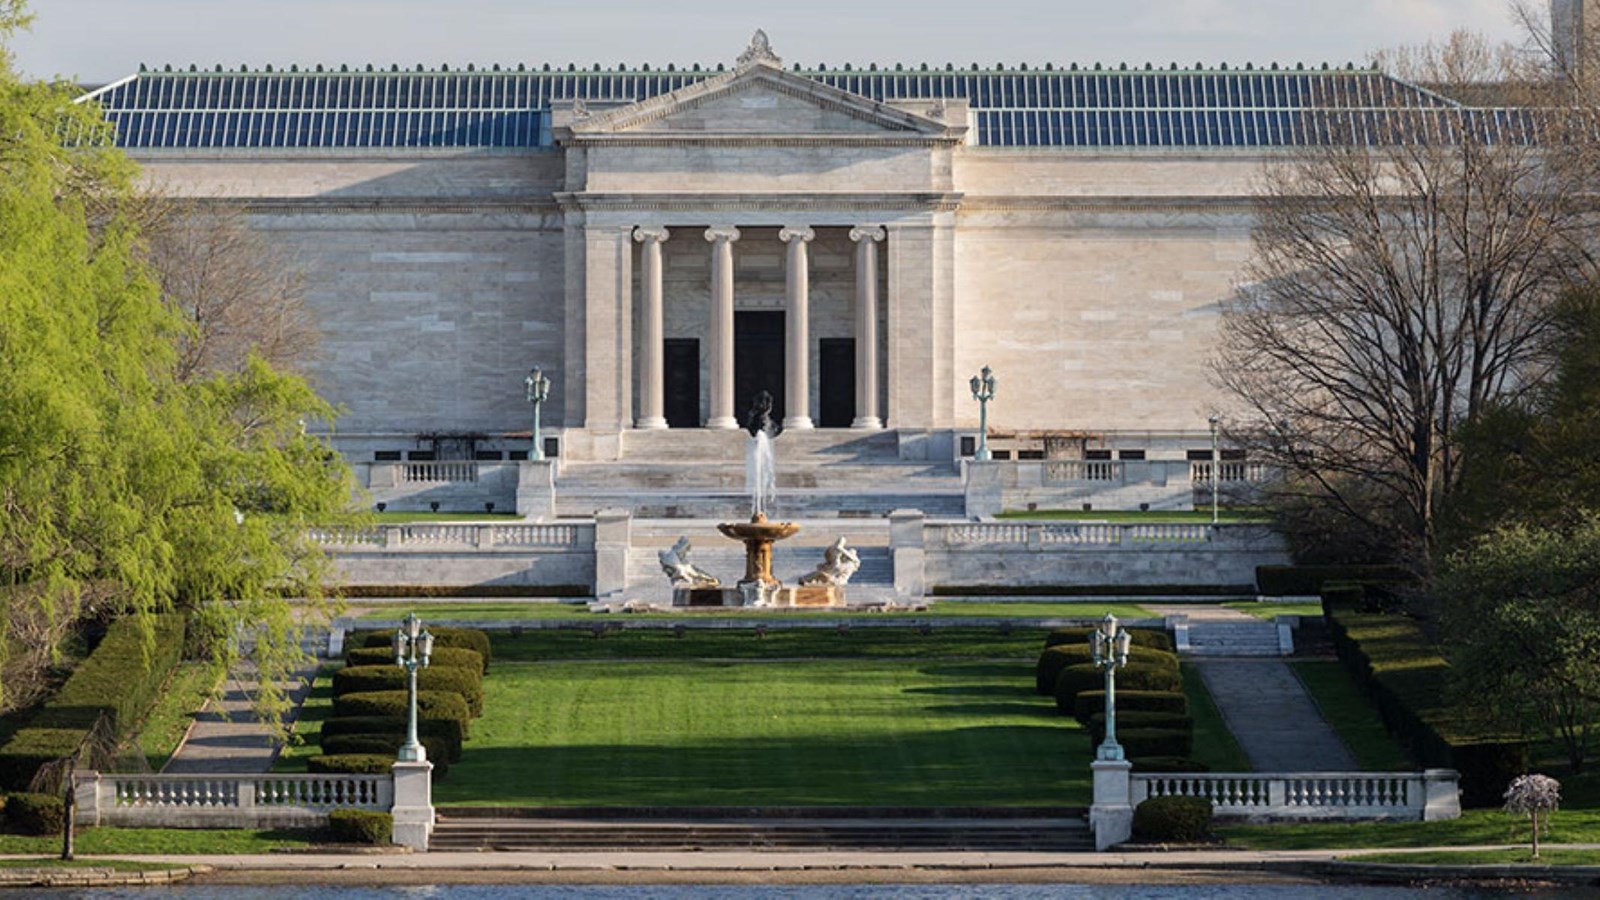 Cleveland Art Museum (U.S. National Park Service)